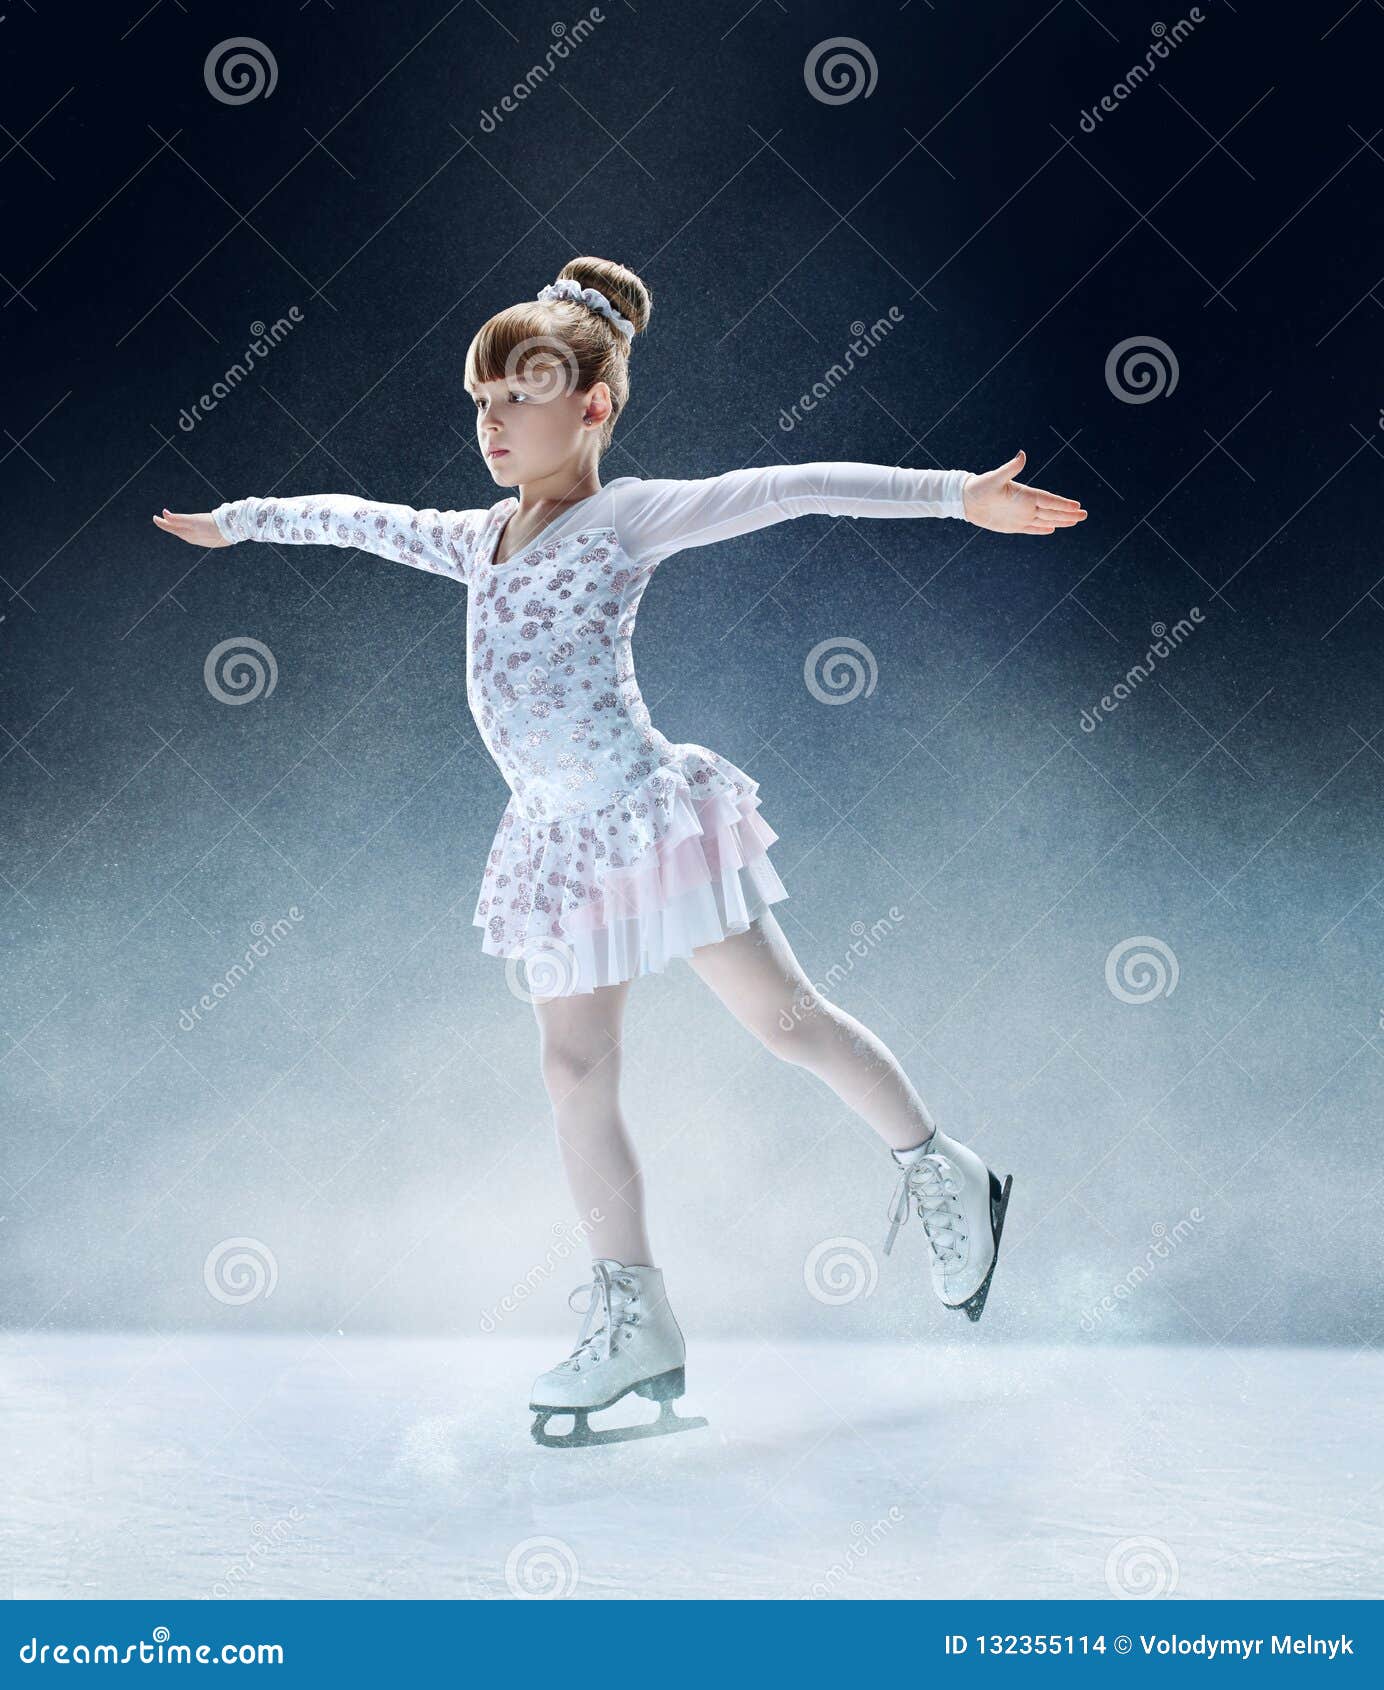 https://thumbs.dreamstime.com/z/patinaje-art%C3%ADstico-la-ni%C3%B1a-en-arena-interior-del-hielo-132355114.jpg